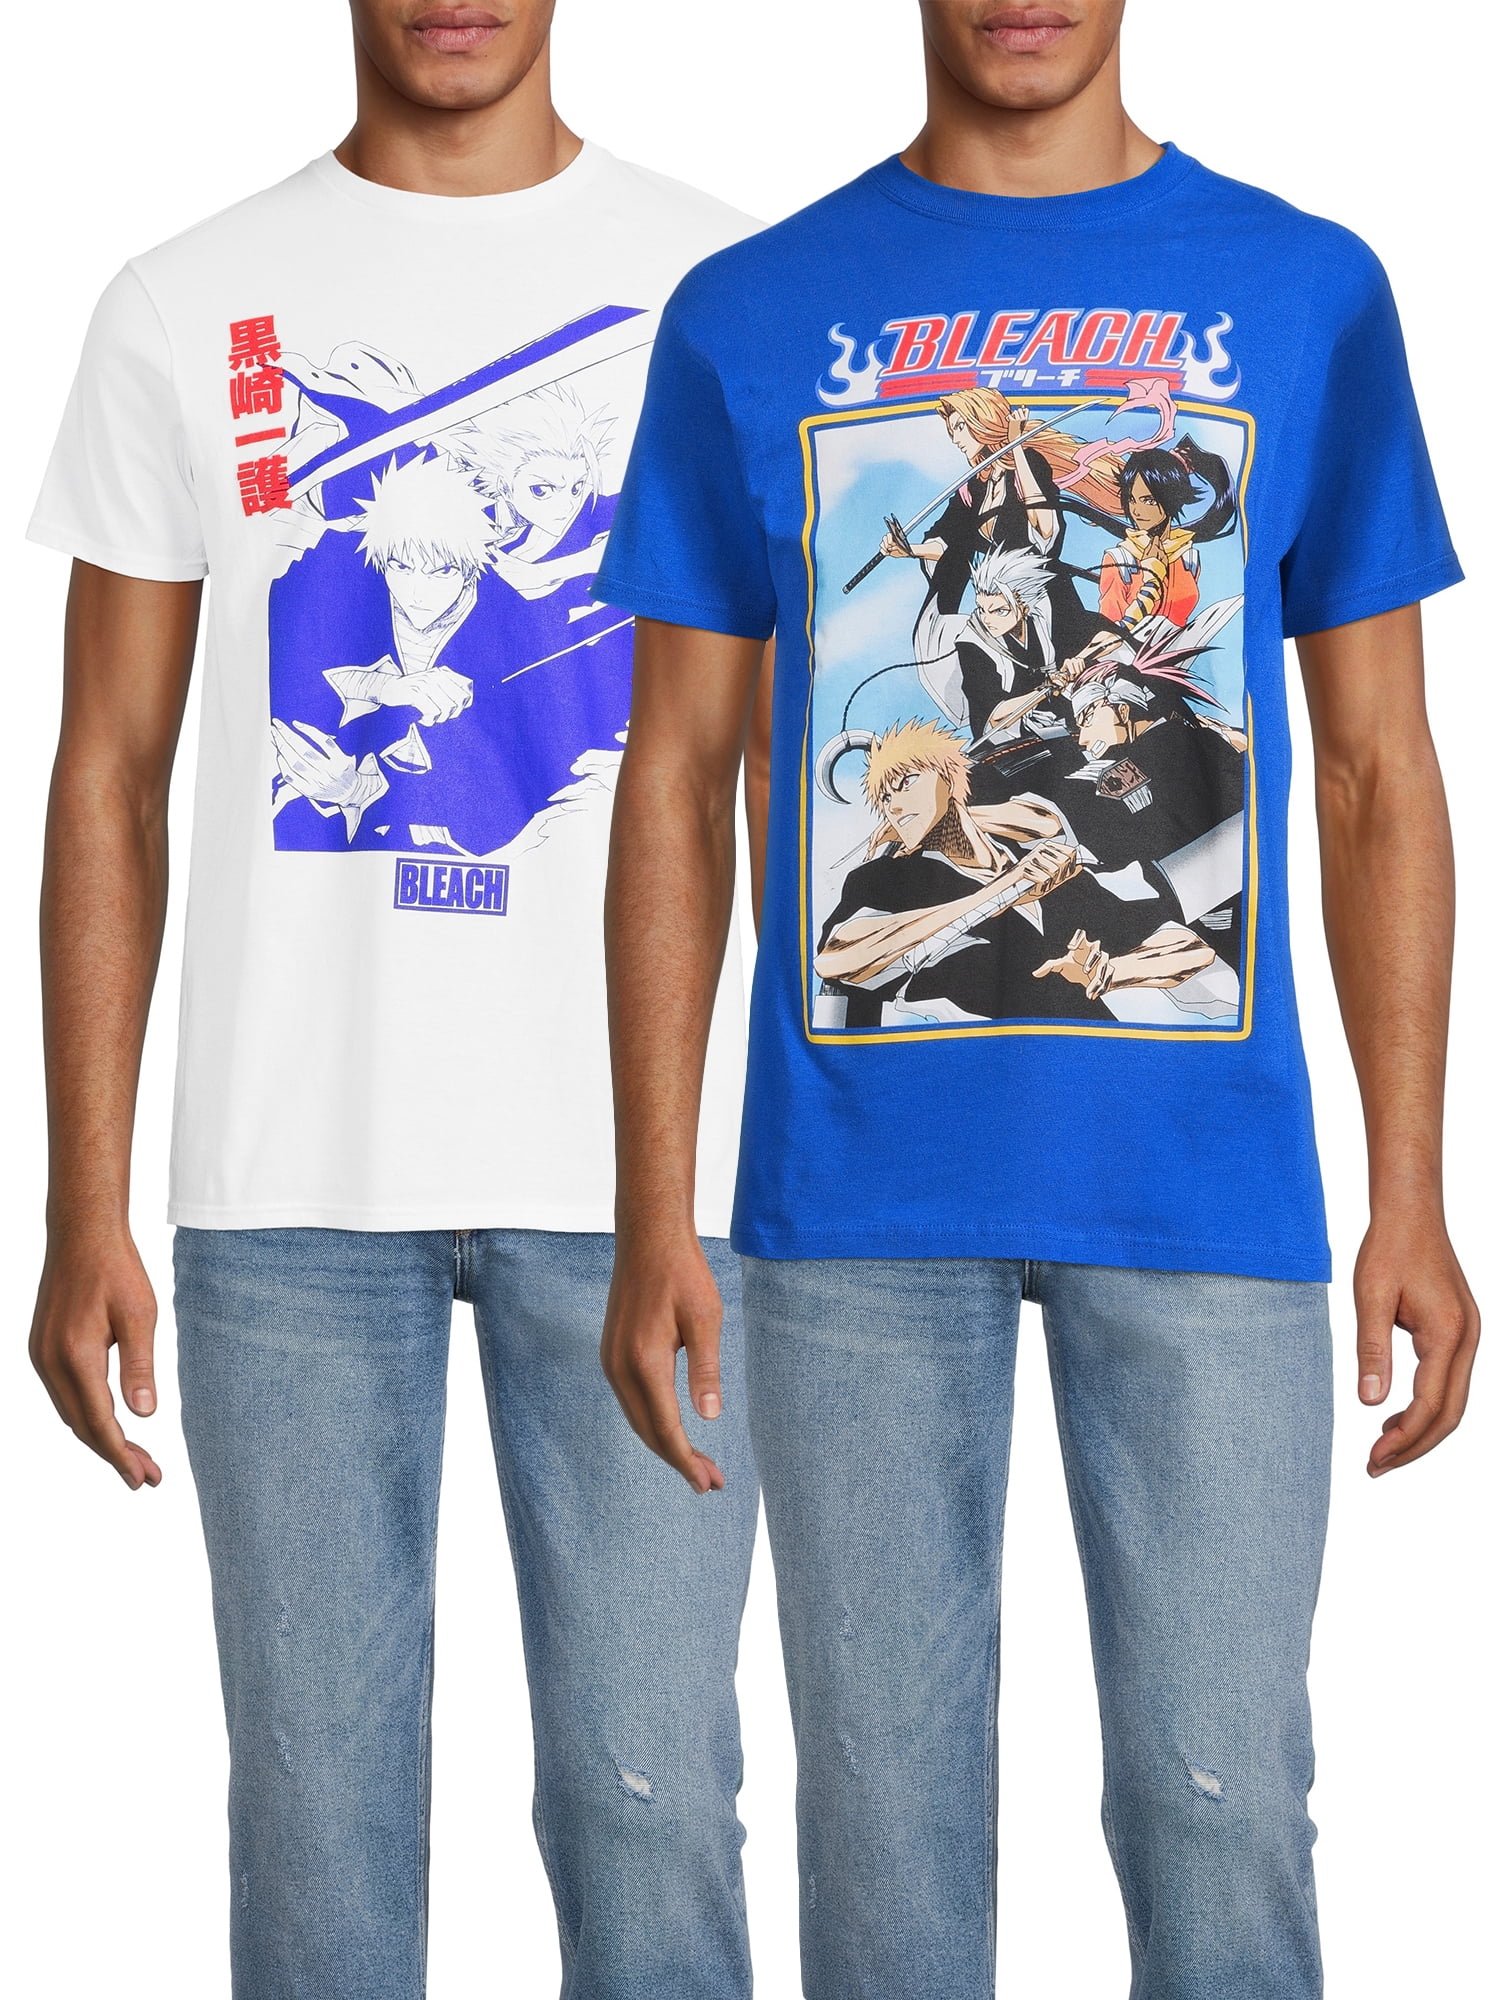 Cowboy Bebop Logo Anime Japan Cartoon Men's Long Sleeve Black T-Shirt Size S-3XL